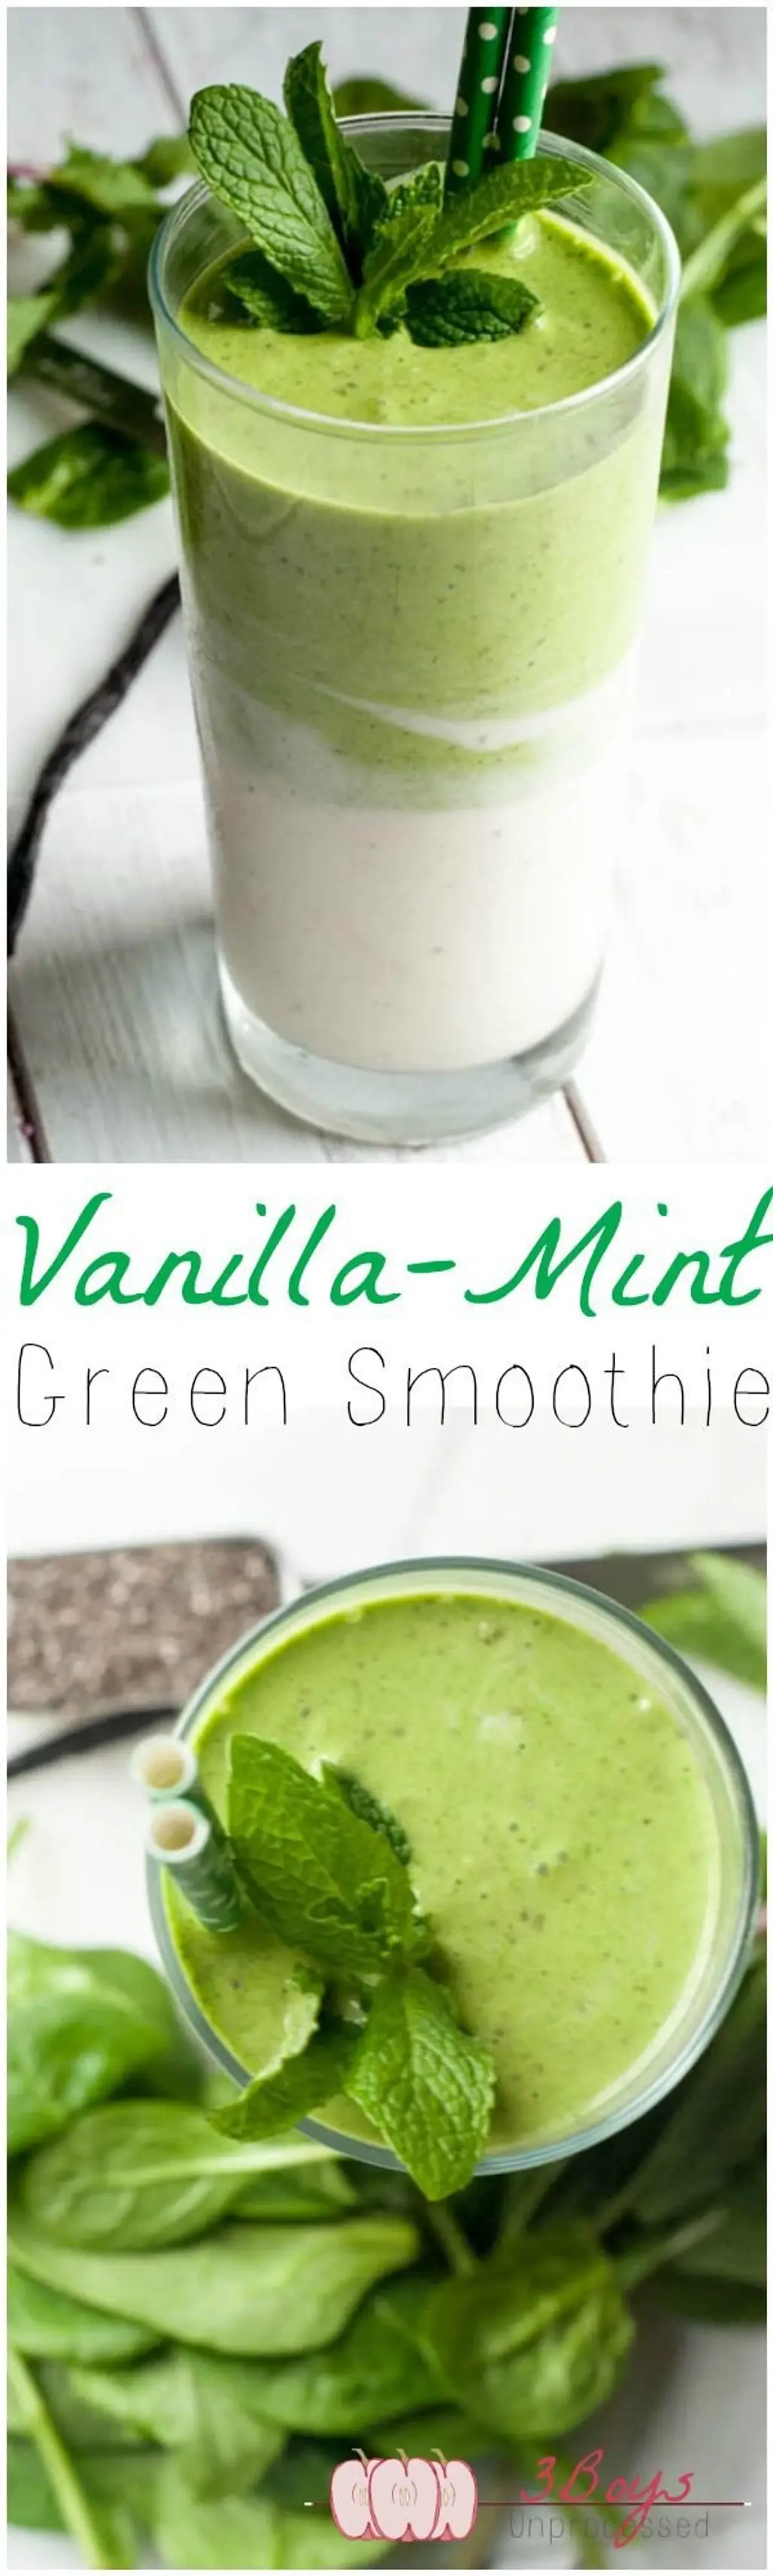 Vanilla Mint Green Smoothie